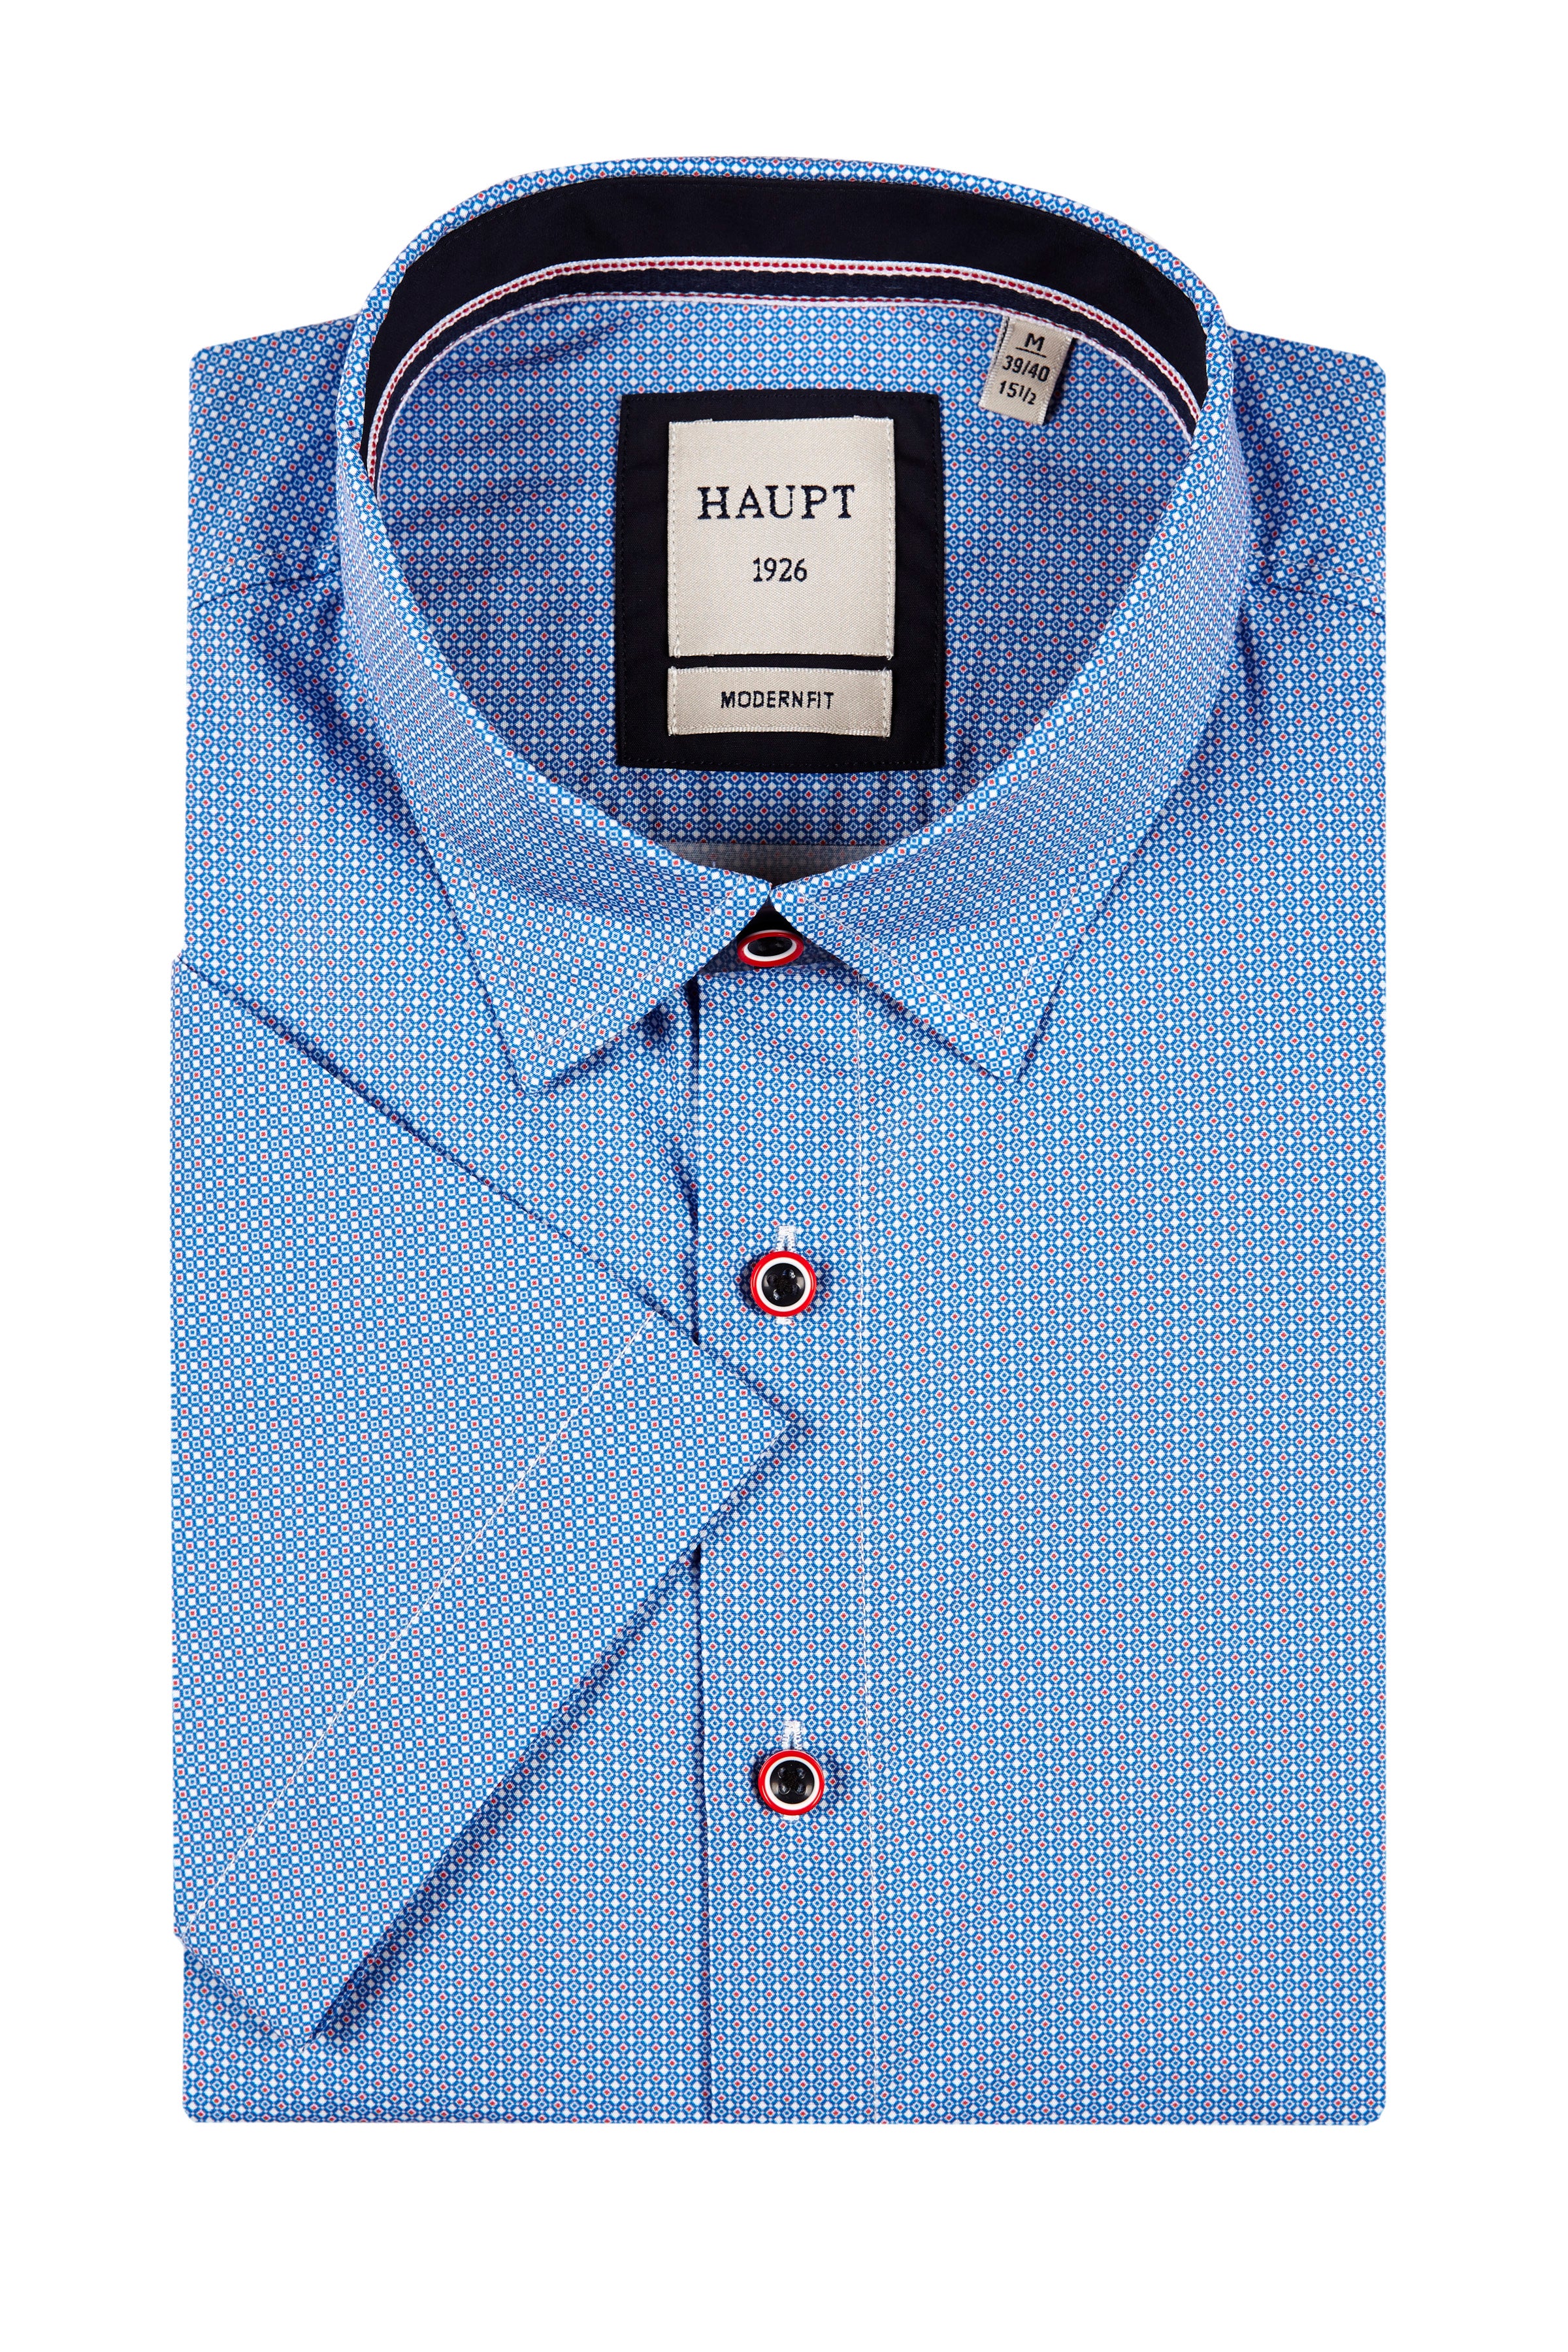 Baumwoll-Herrenhemd true blue print